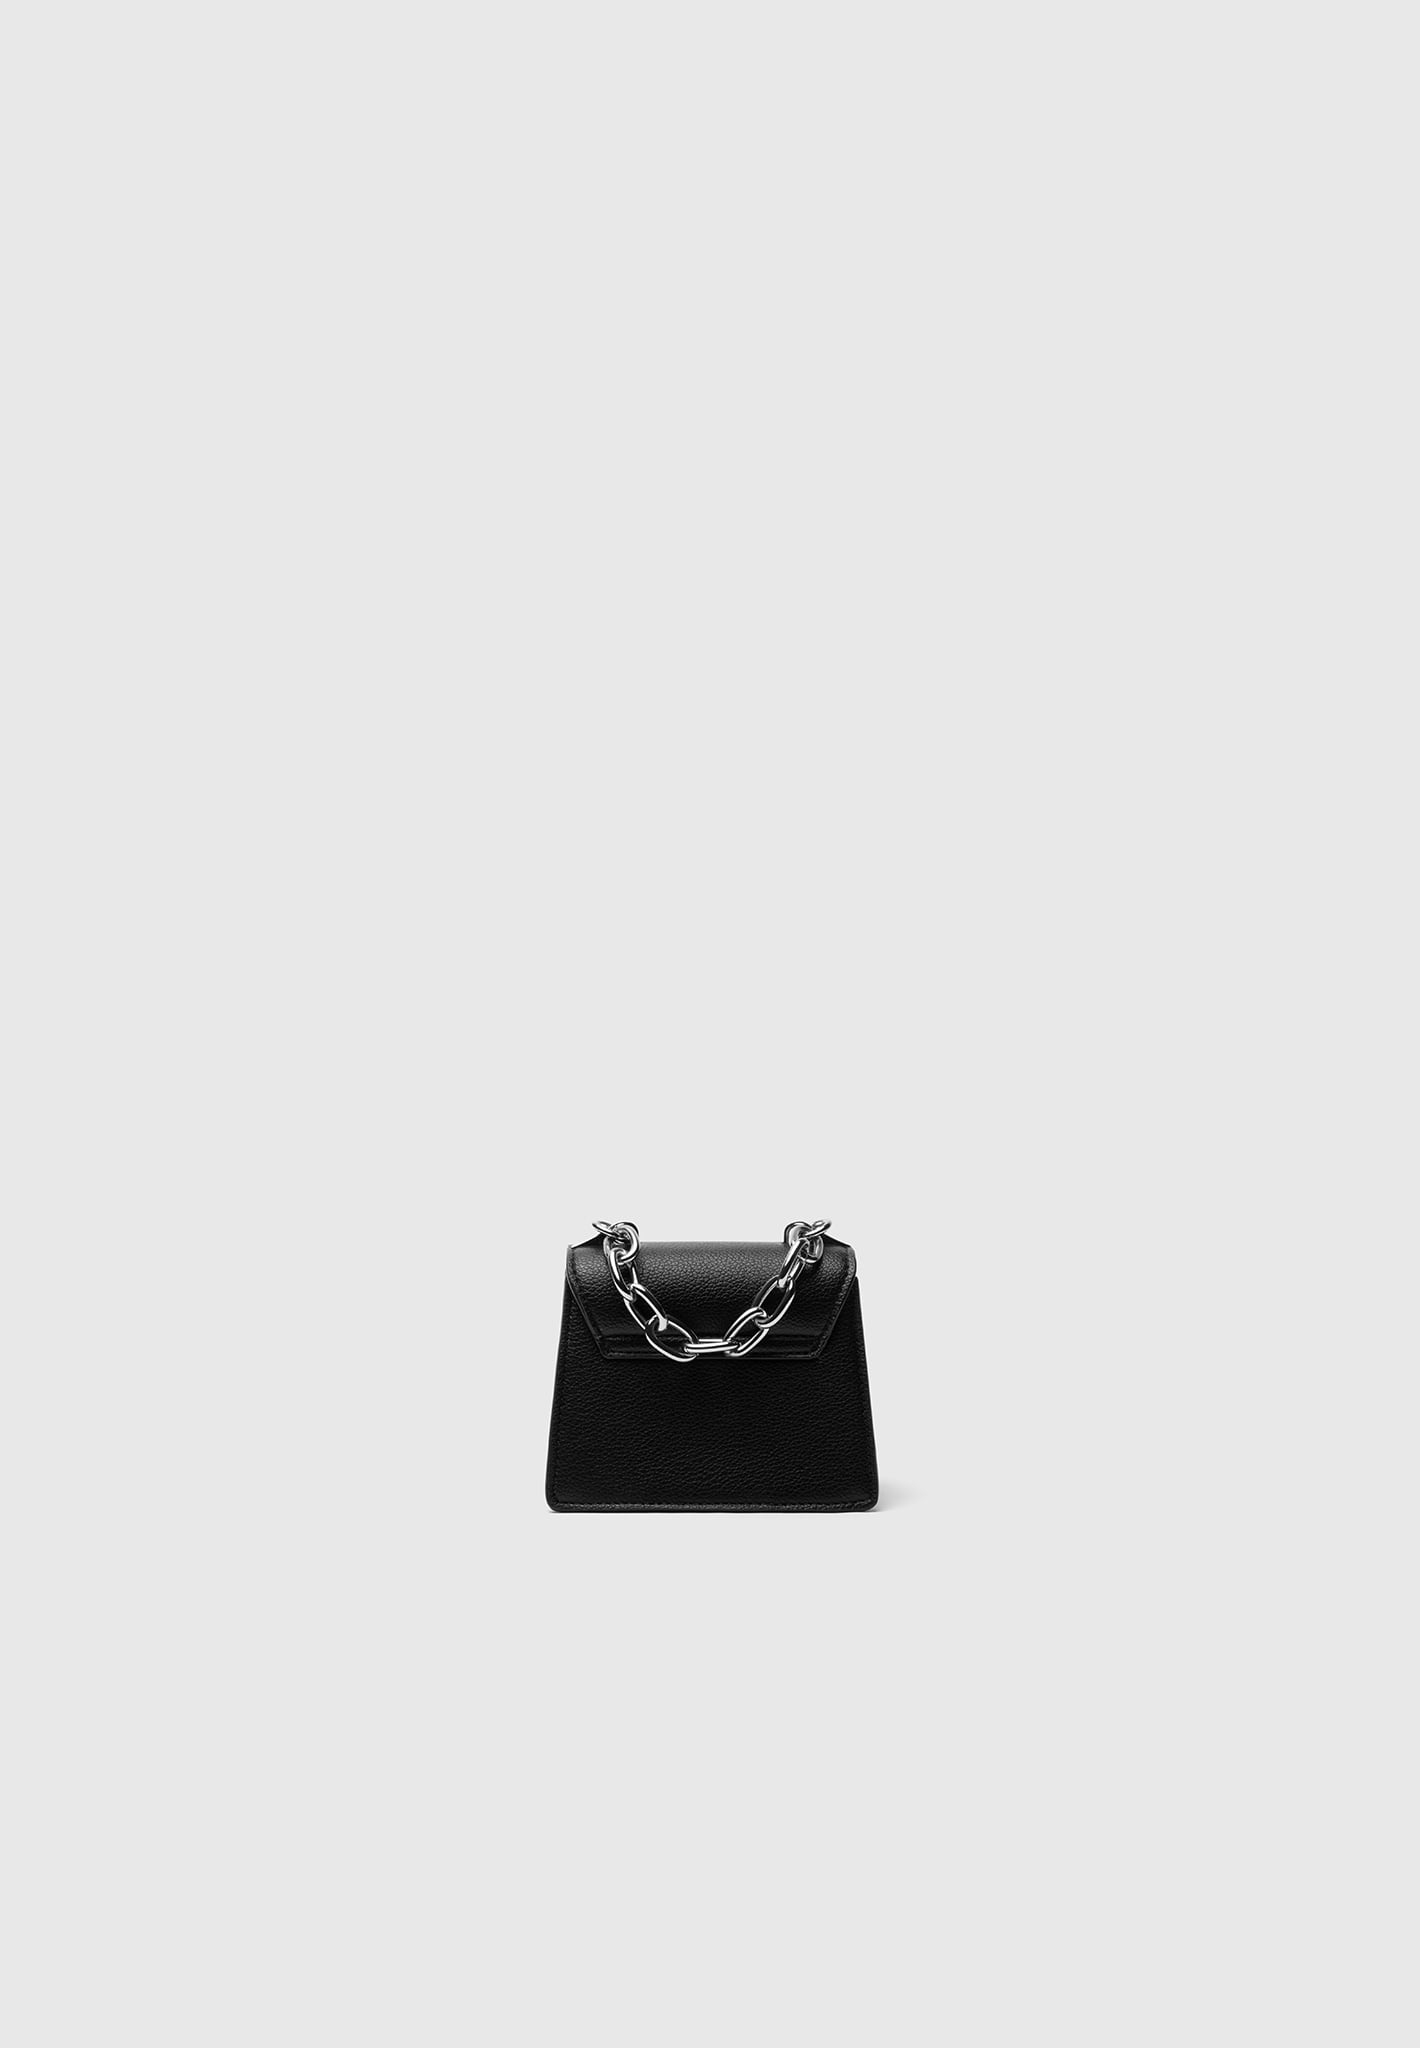 Miniature Bag - Black